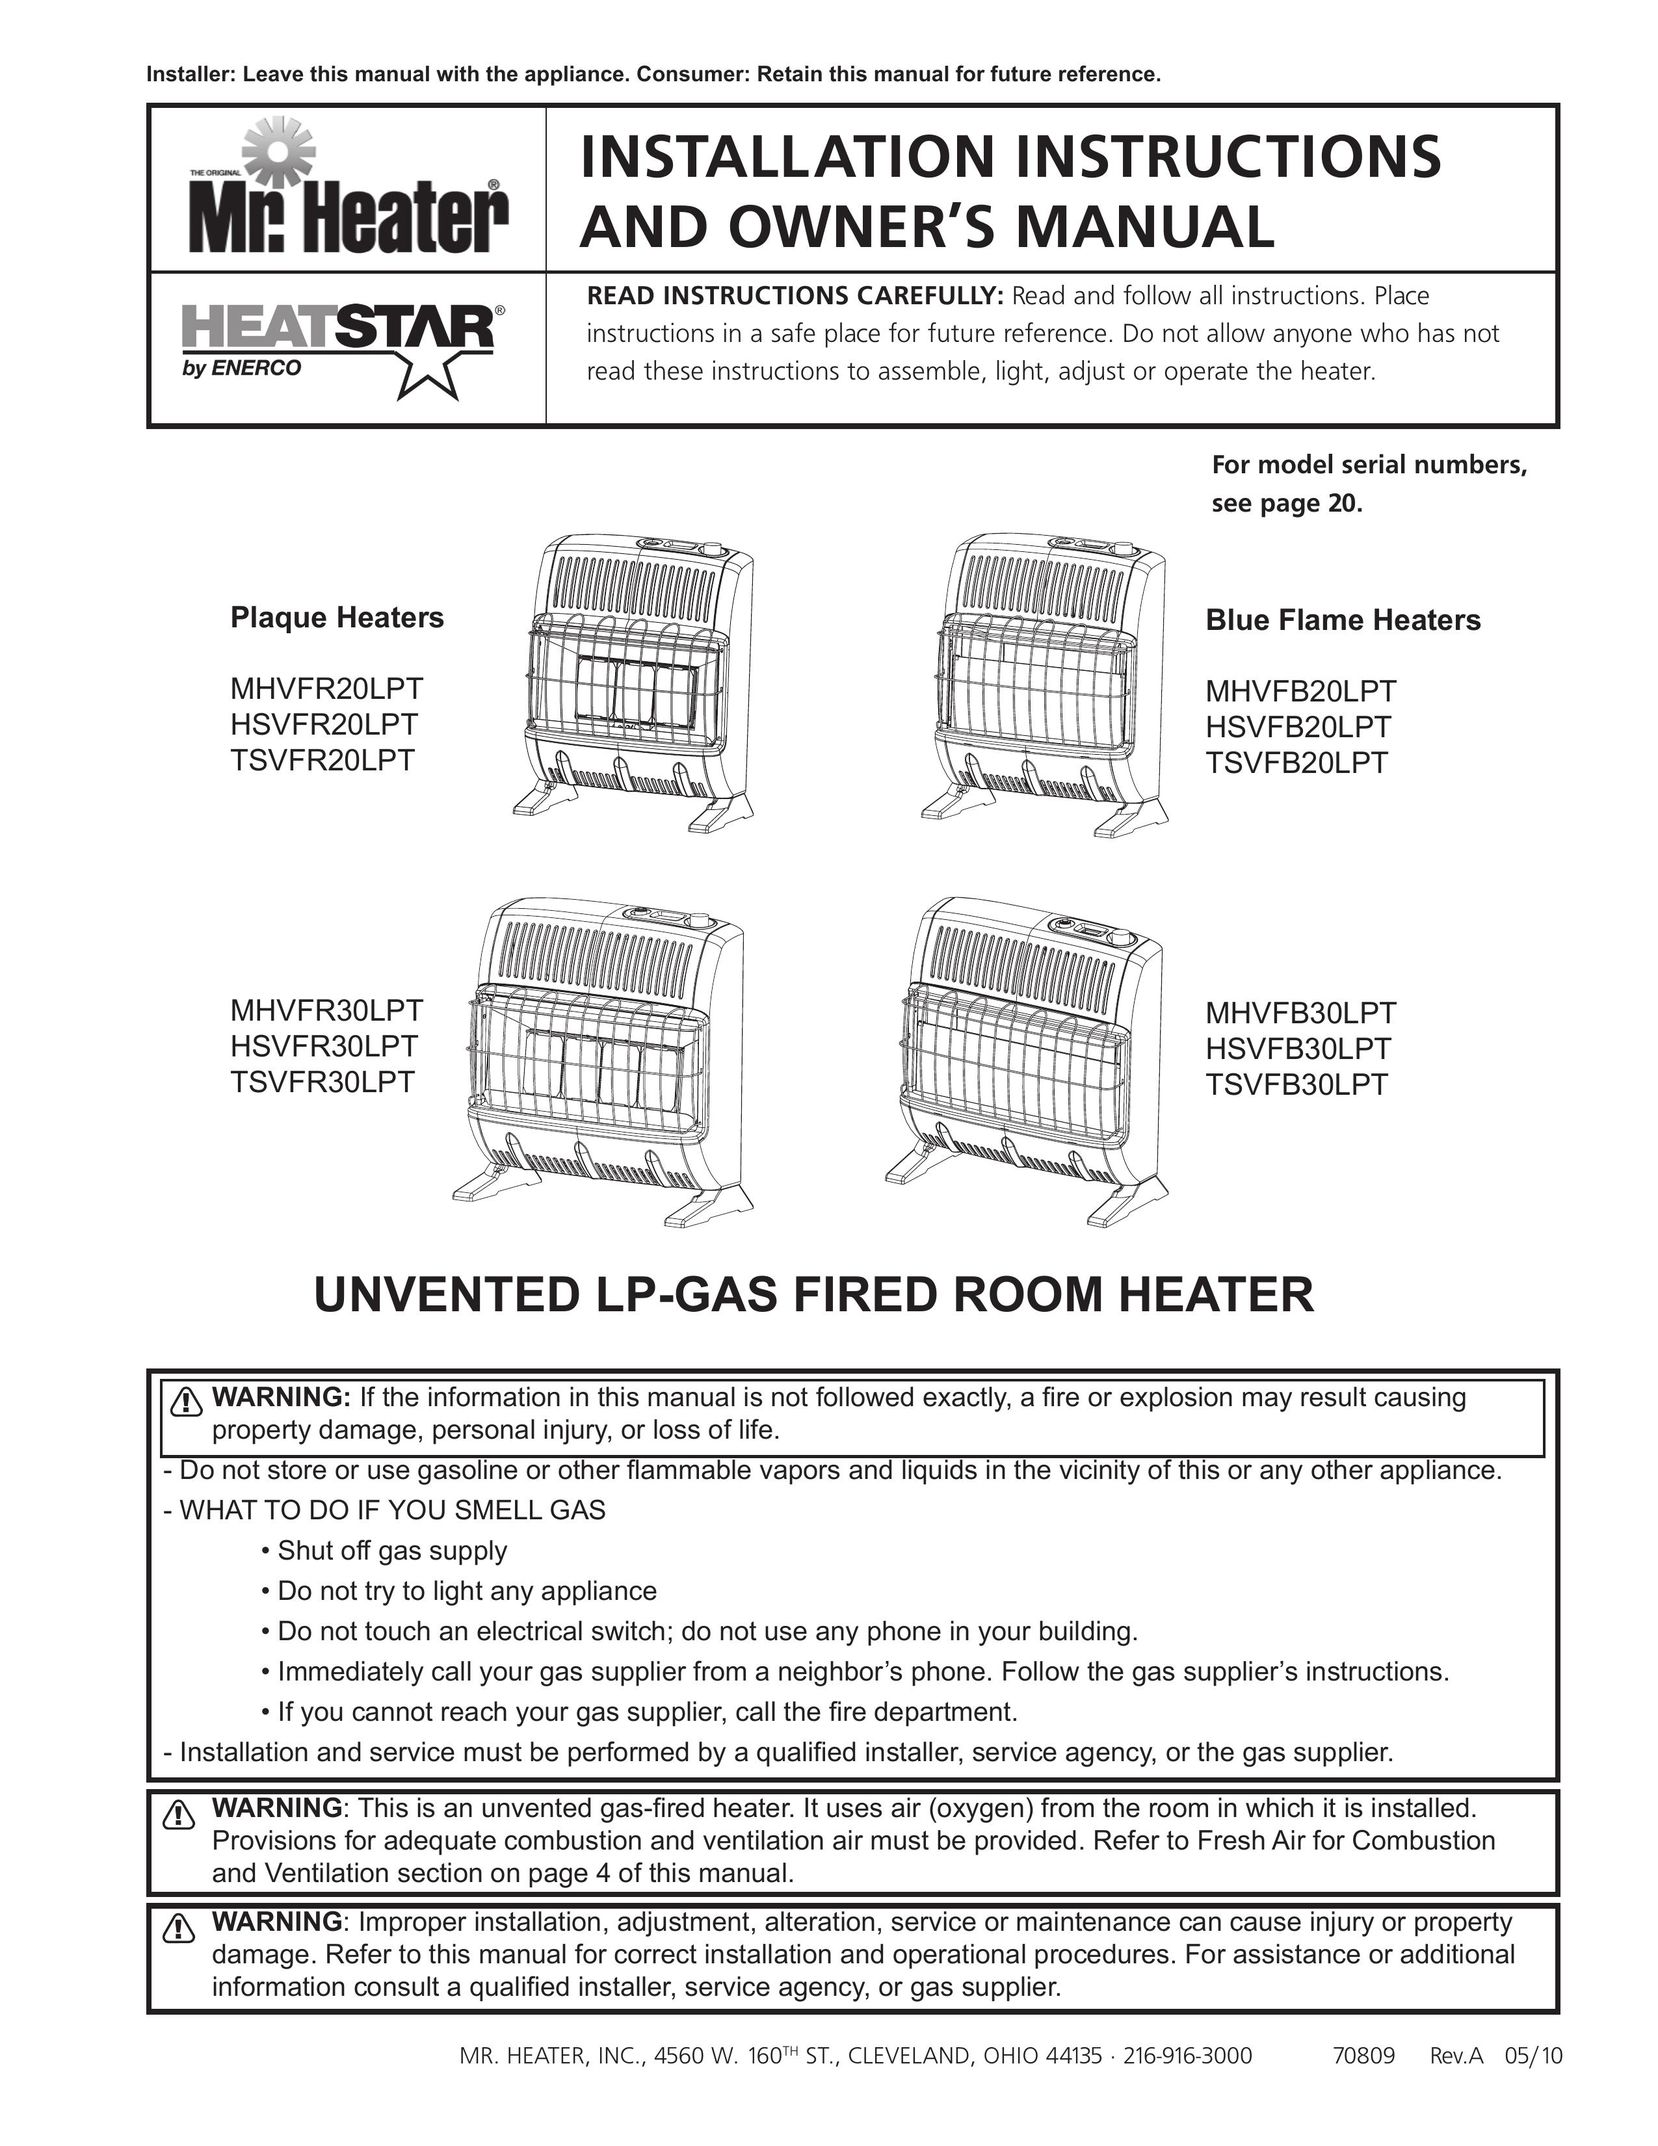 Enerco TSVFB20LPT Gas Heater User Manual